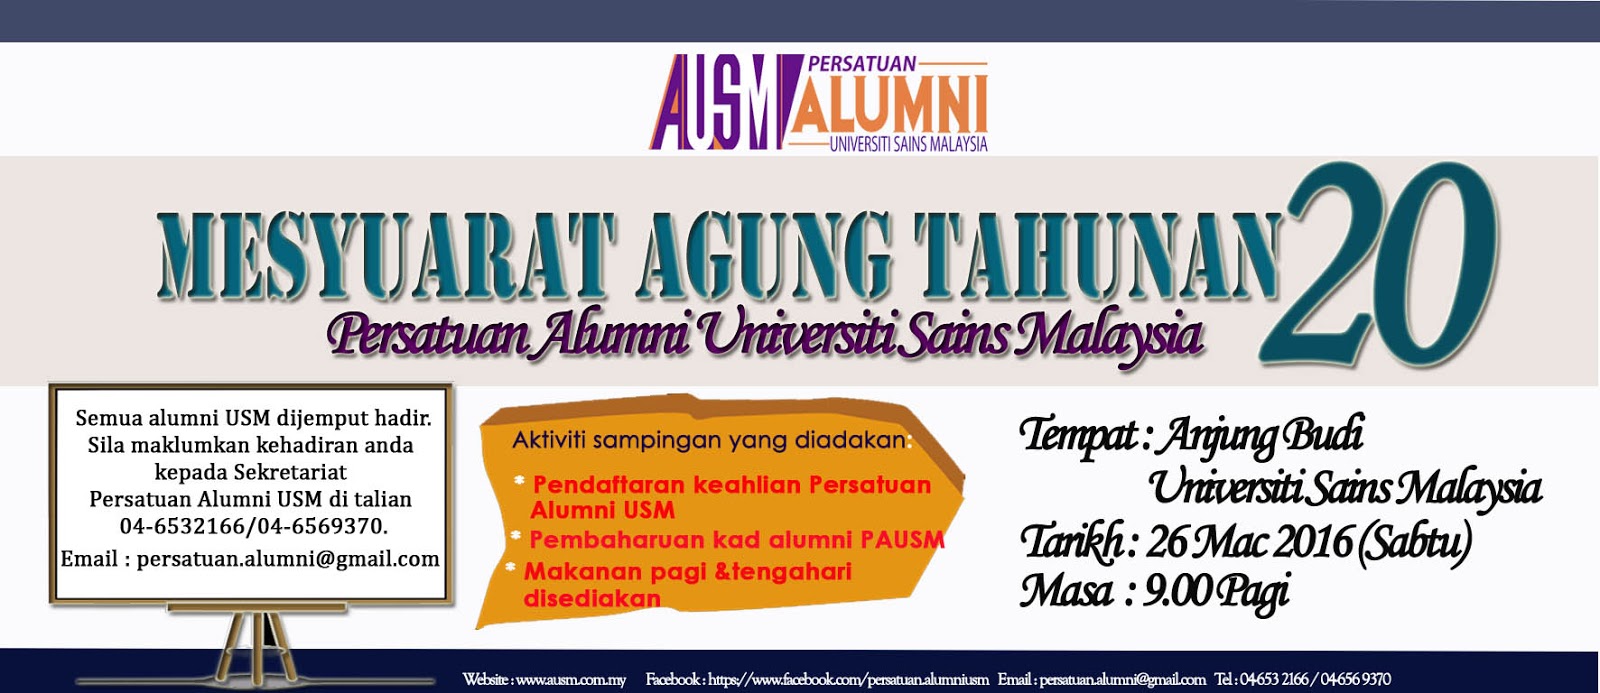 Persatuan Alumni USM : Mesyuarat Agung Tahunan Persatuan ...